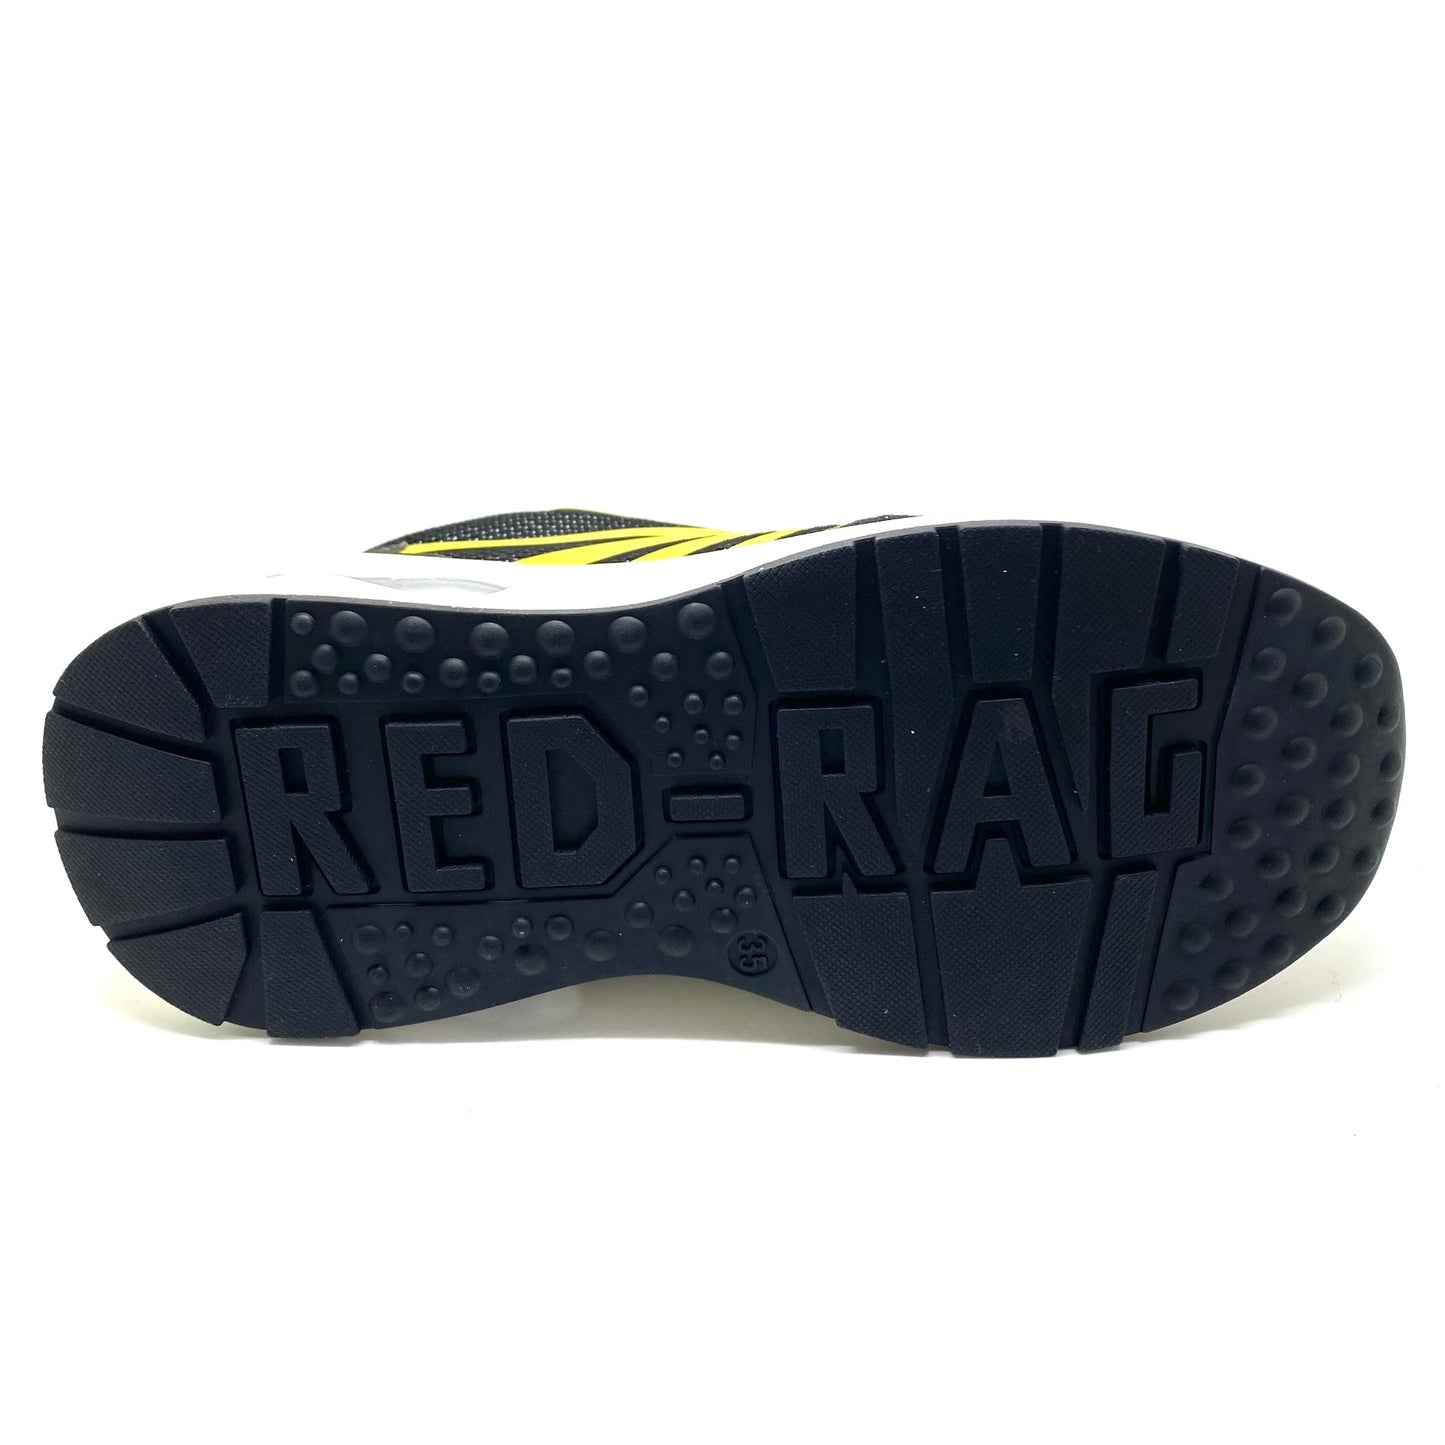 Red Rag runner zwart geel.